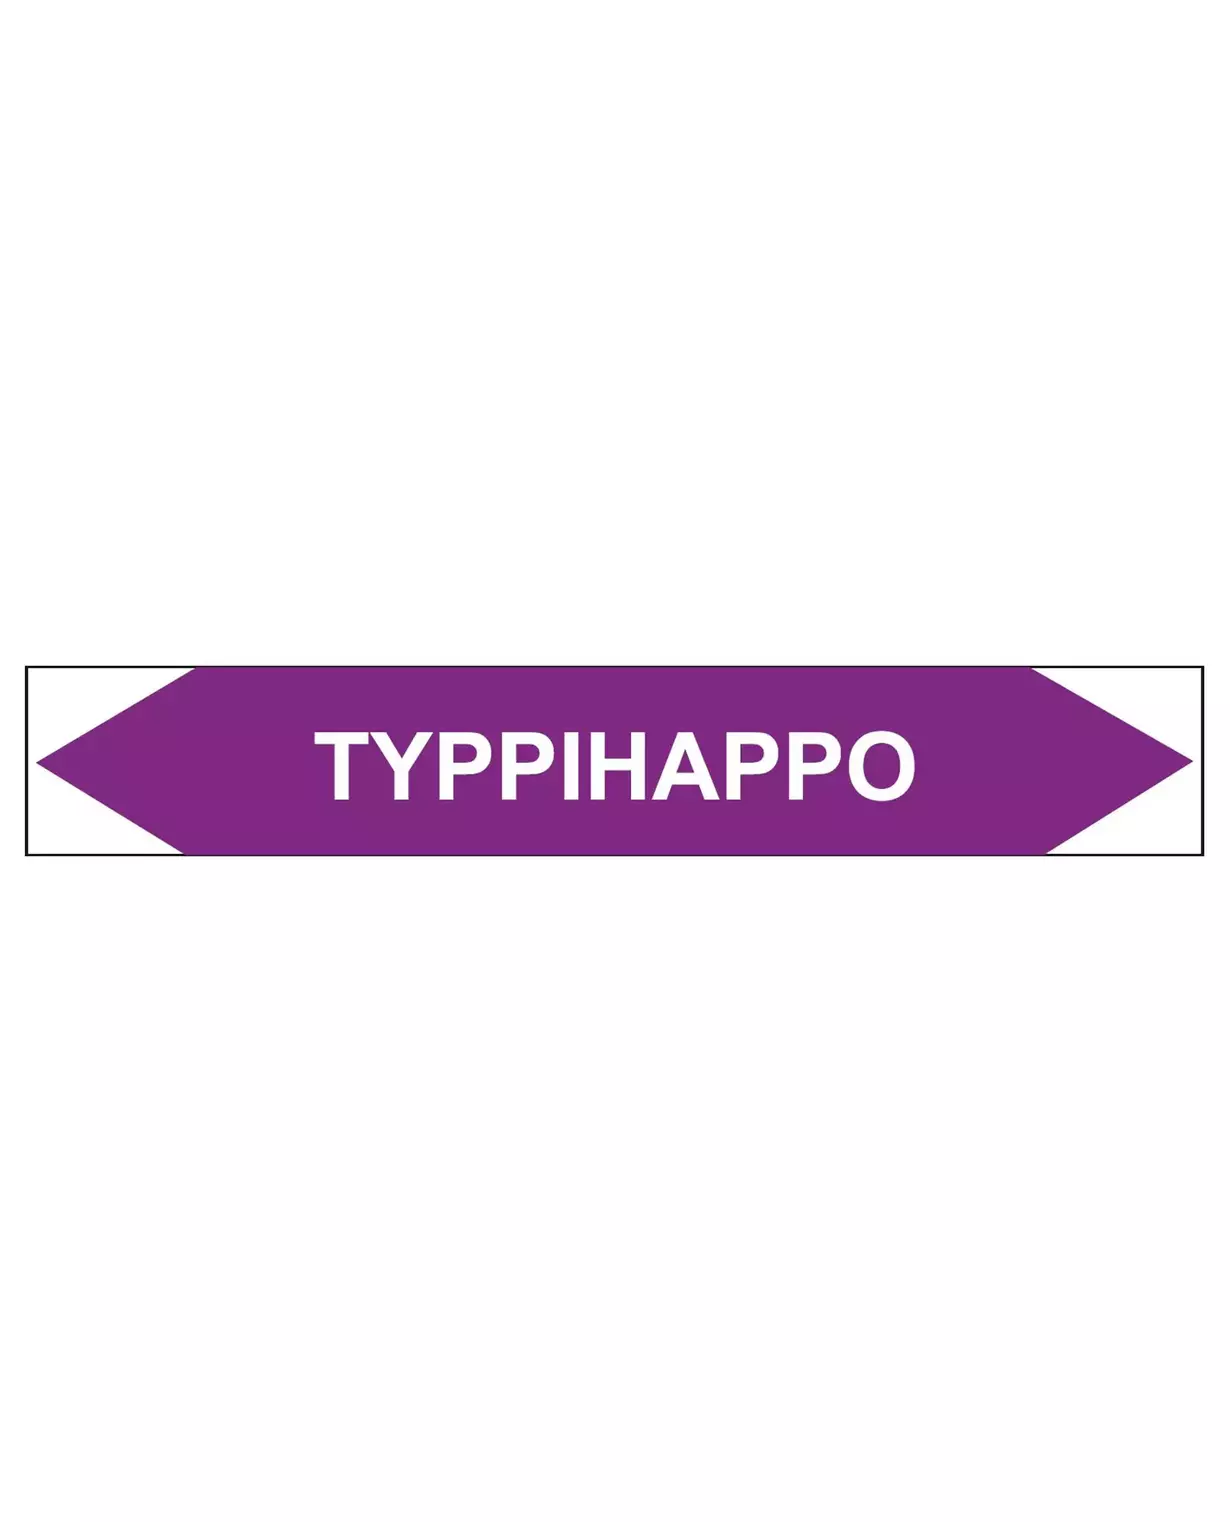 Typpihappo, 160x25 mm